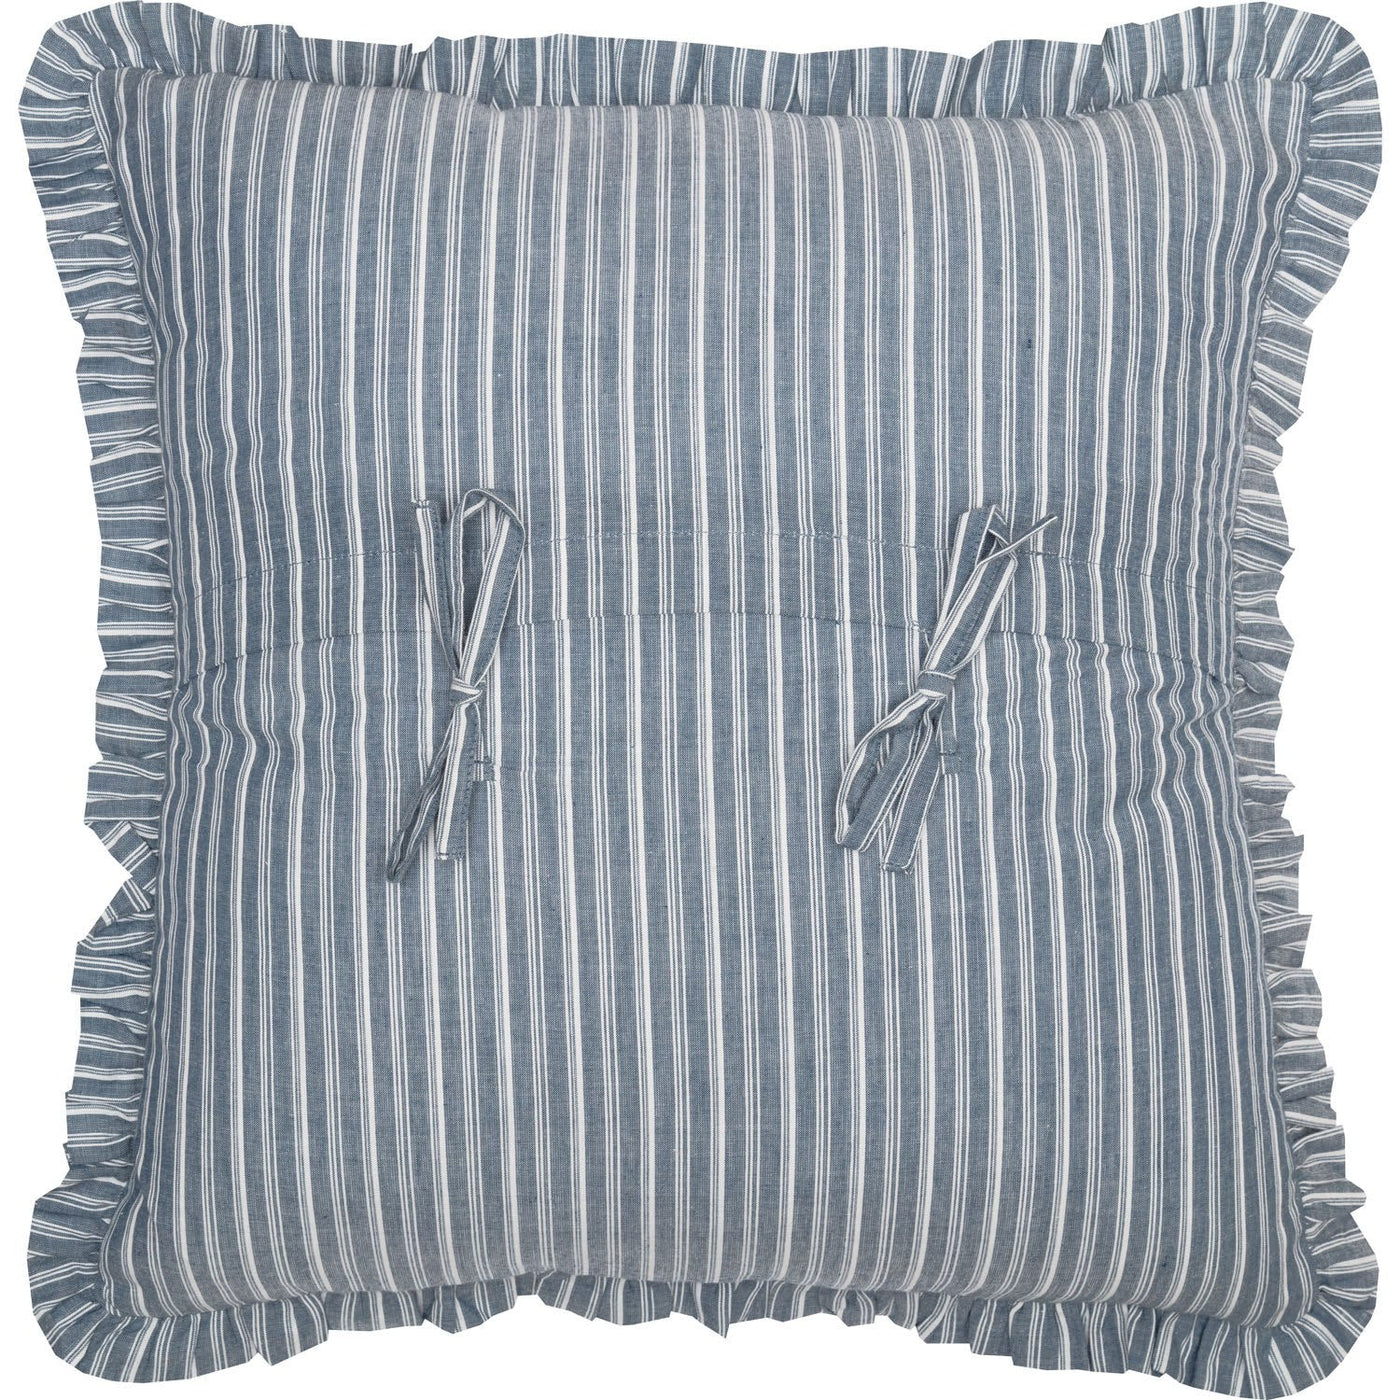 Kiraly Utca III 18 x 18 Pillow - Blue